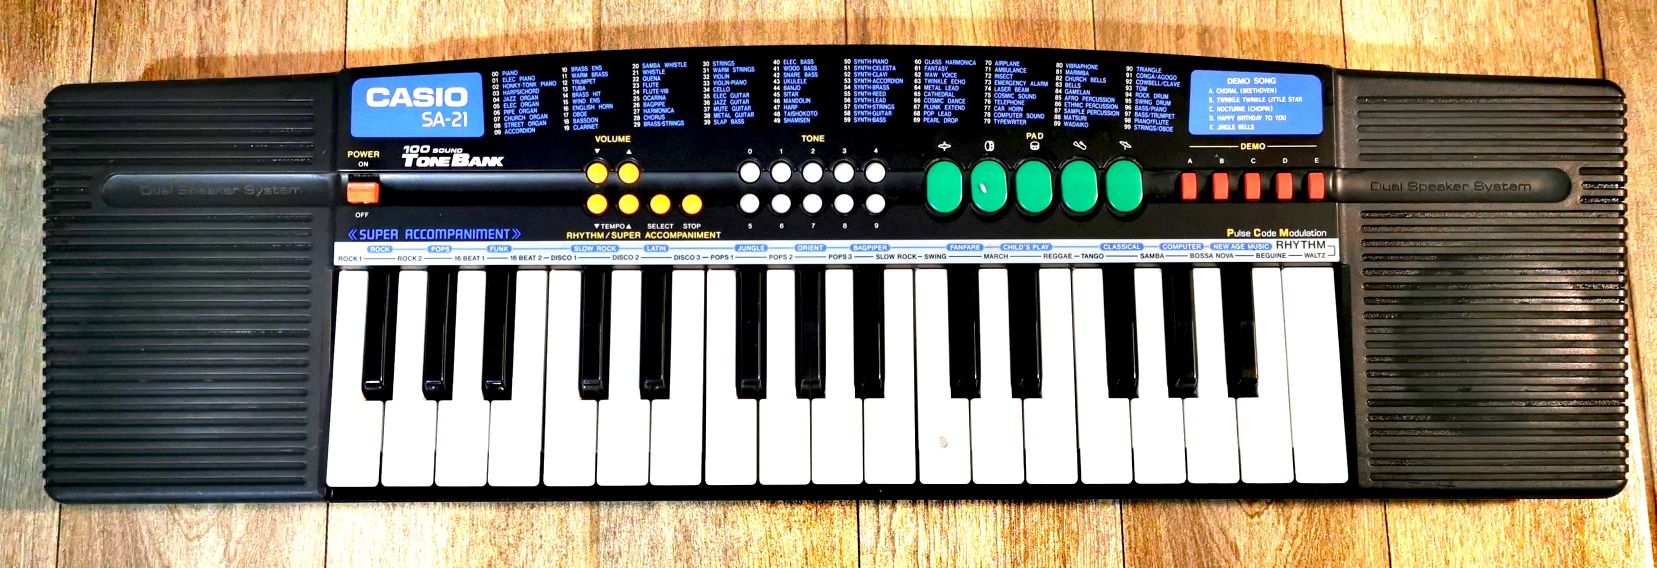 Instrument musical electronic piano tone Casio mini keyboard